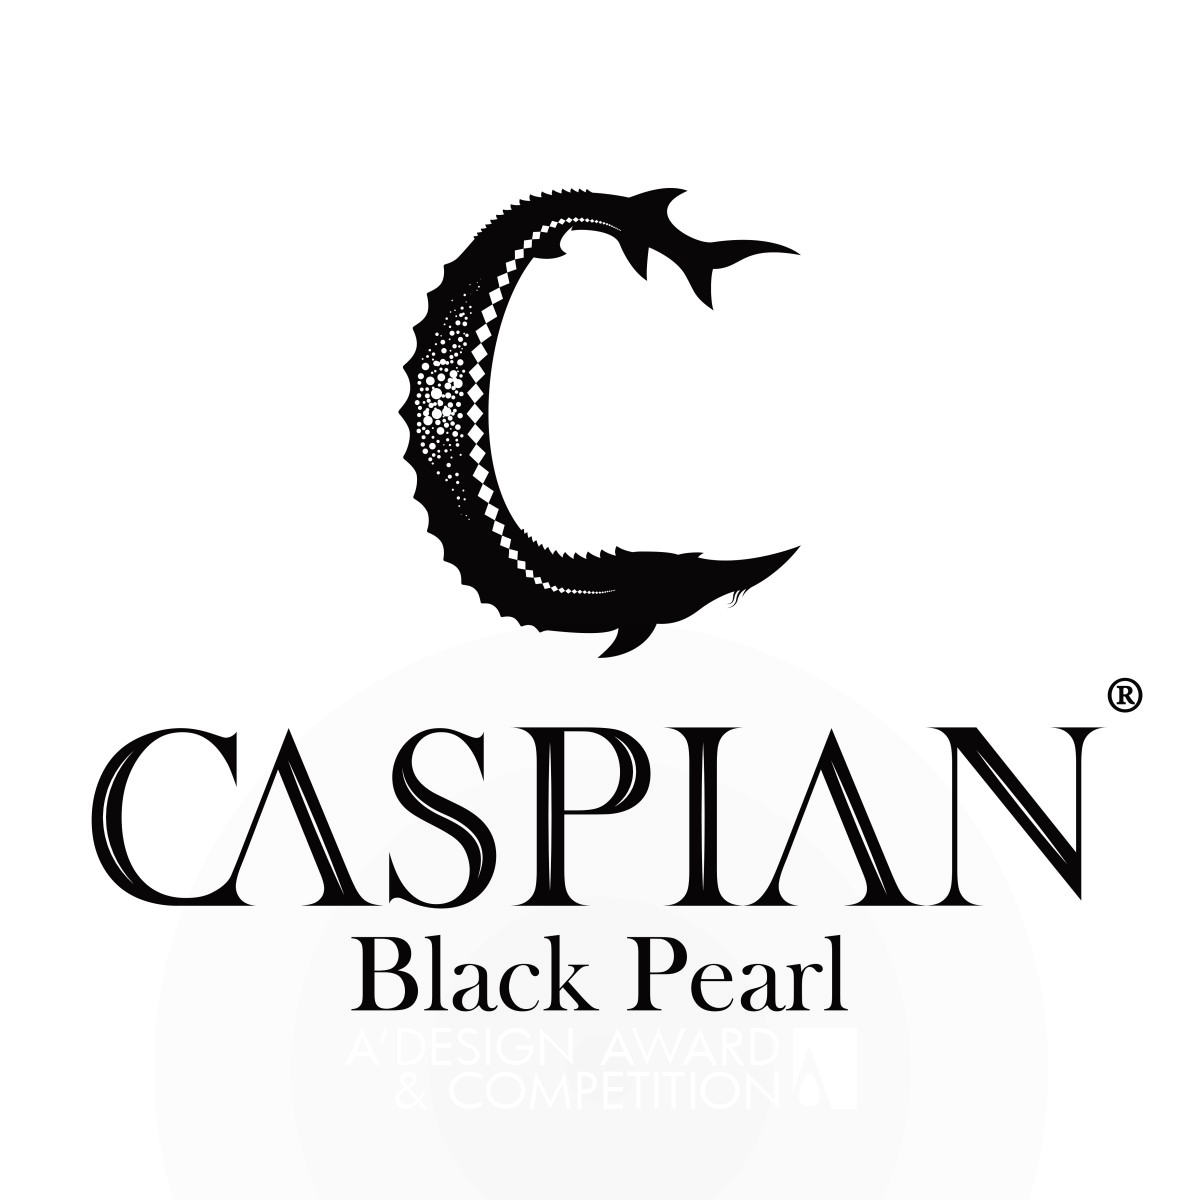 Caspian Black Pearl <b>Logo and Label